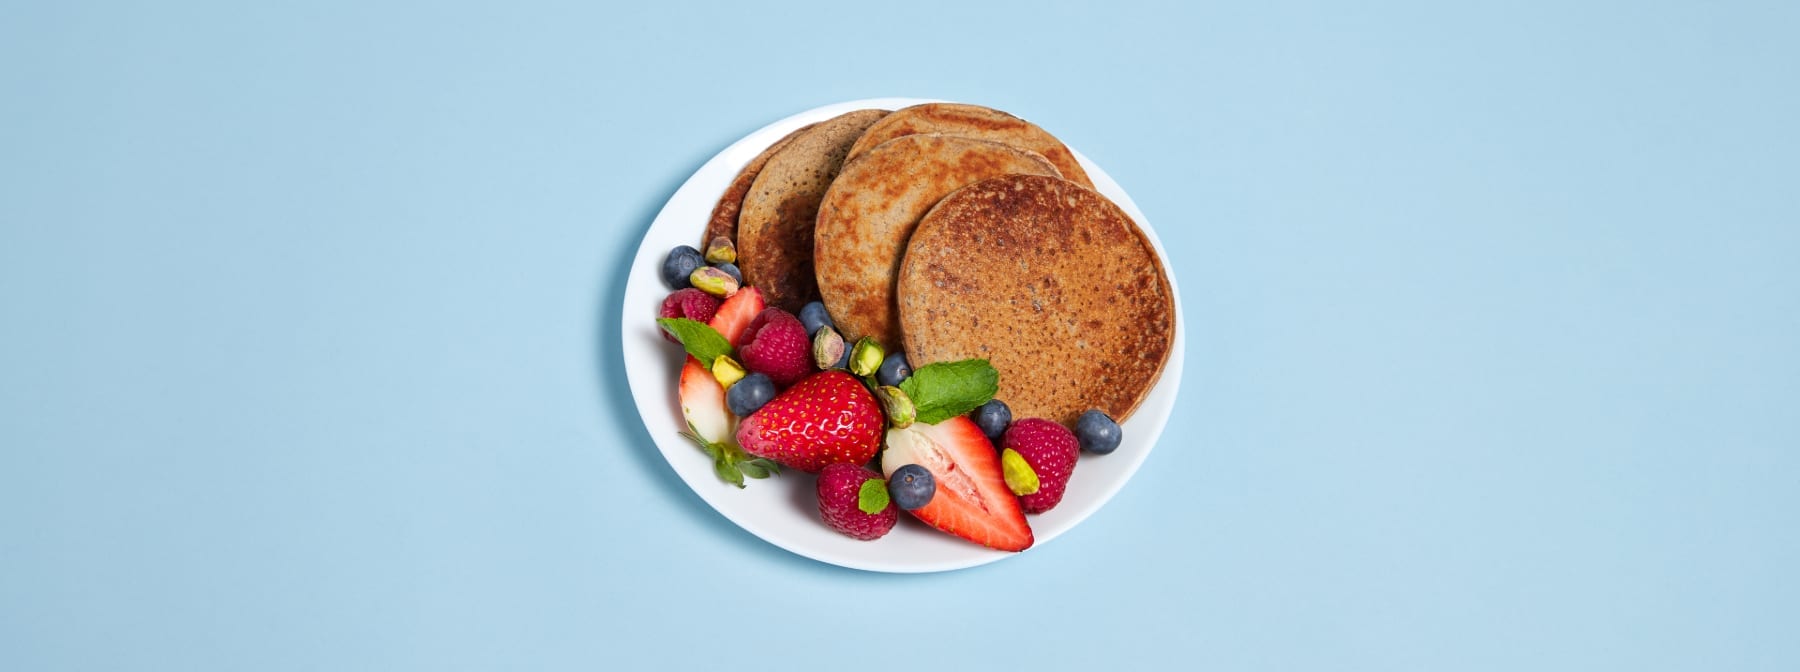 How To Make The Perfect Vegan Pancake